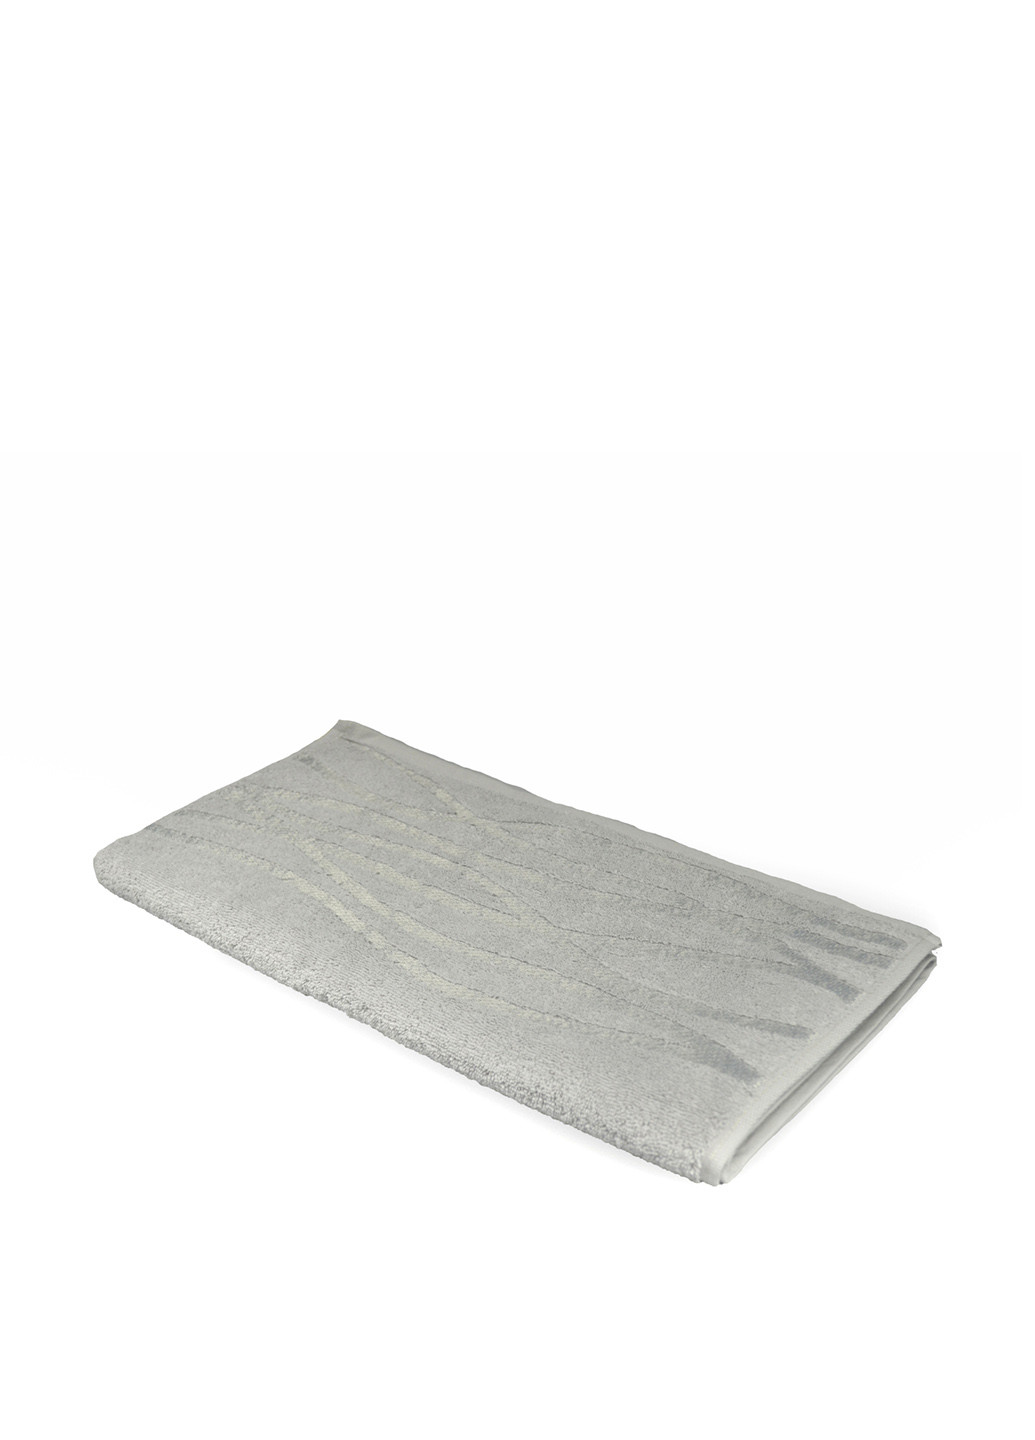 No Brand полотенце, 50х90 см однотонный серый производство - Турция